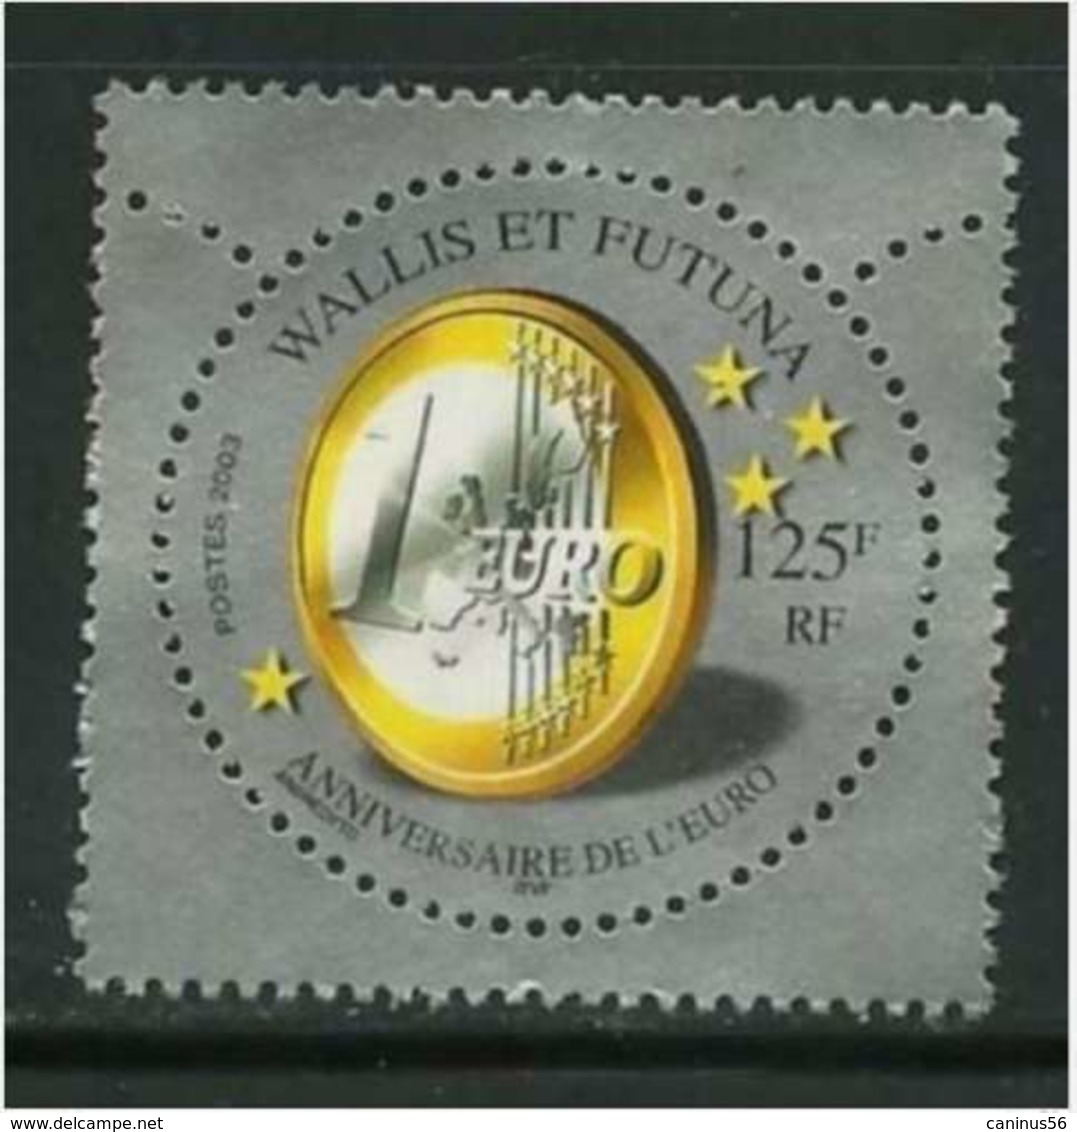 Wallis Et Futuna 2003 YT 590** Neuf Anniversaire De L'euro - Unused Stamps